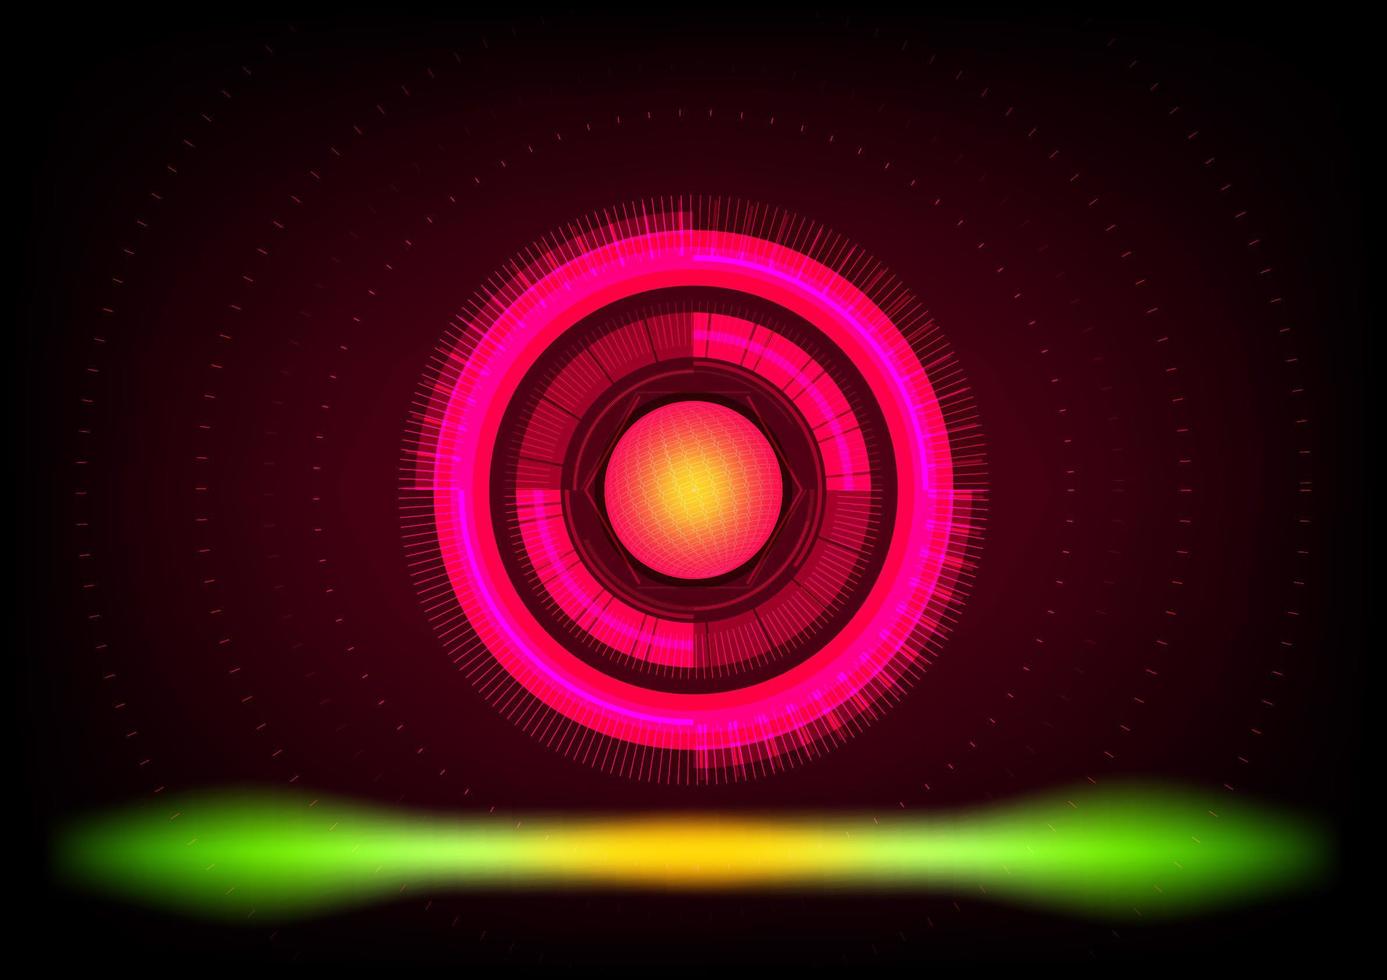 Abstract backgrounds light shiny ball circle colorful digital animation technology motion futuristic art design wallpaper pattern illustration photo